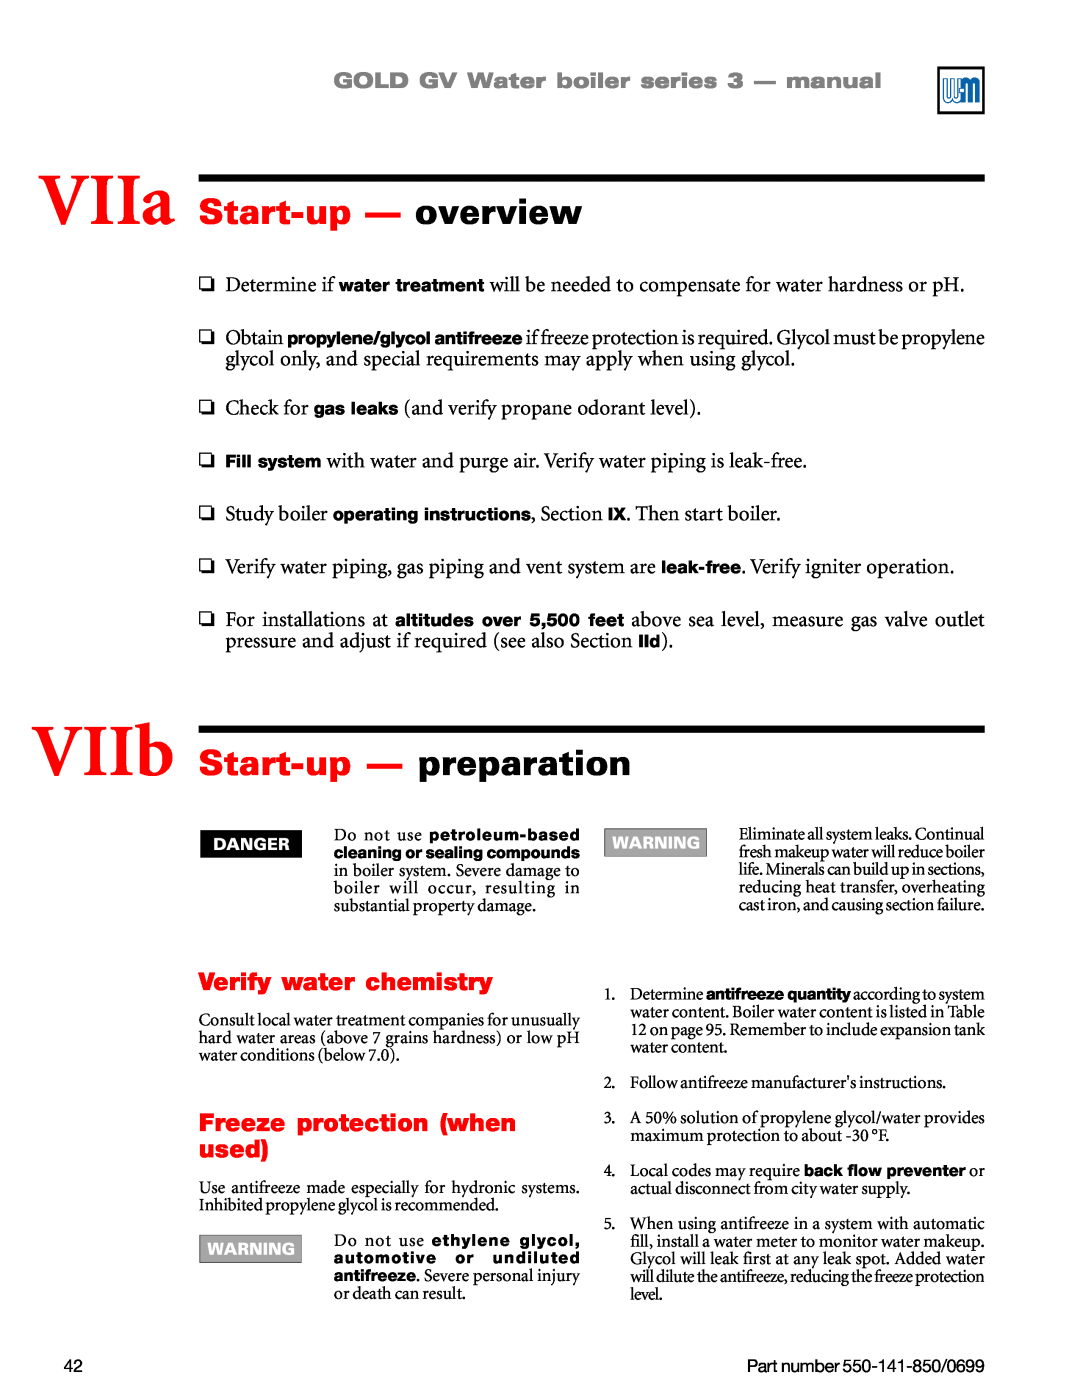 Weil-McLain GOLD DV WATER BOILER manual VIIa Start-up— overview, VIIb Start-up— preparation, Verify water chemistry 